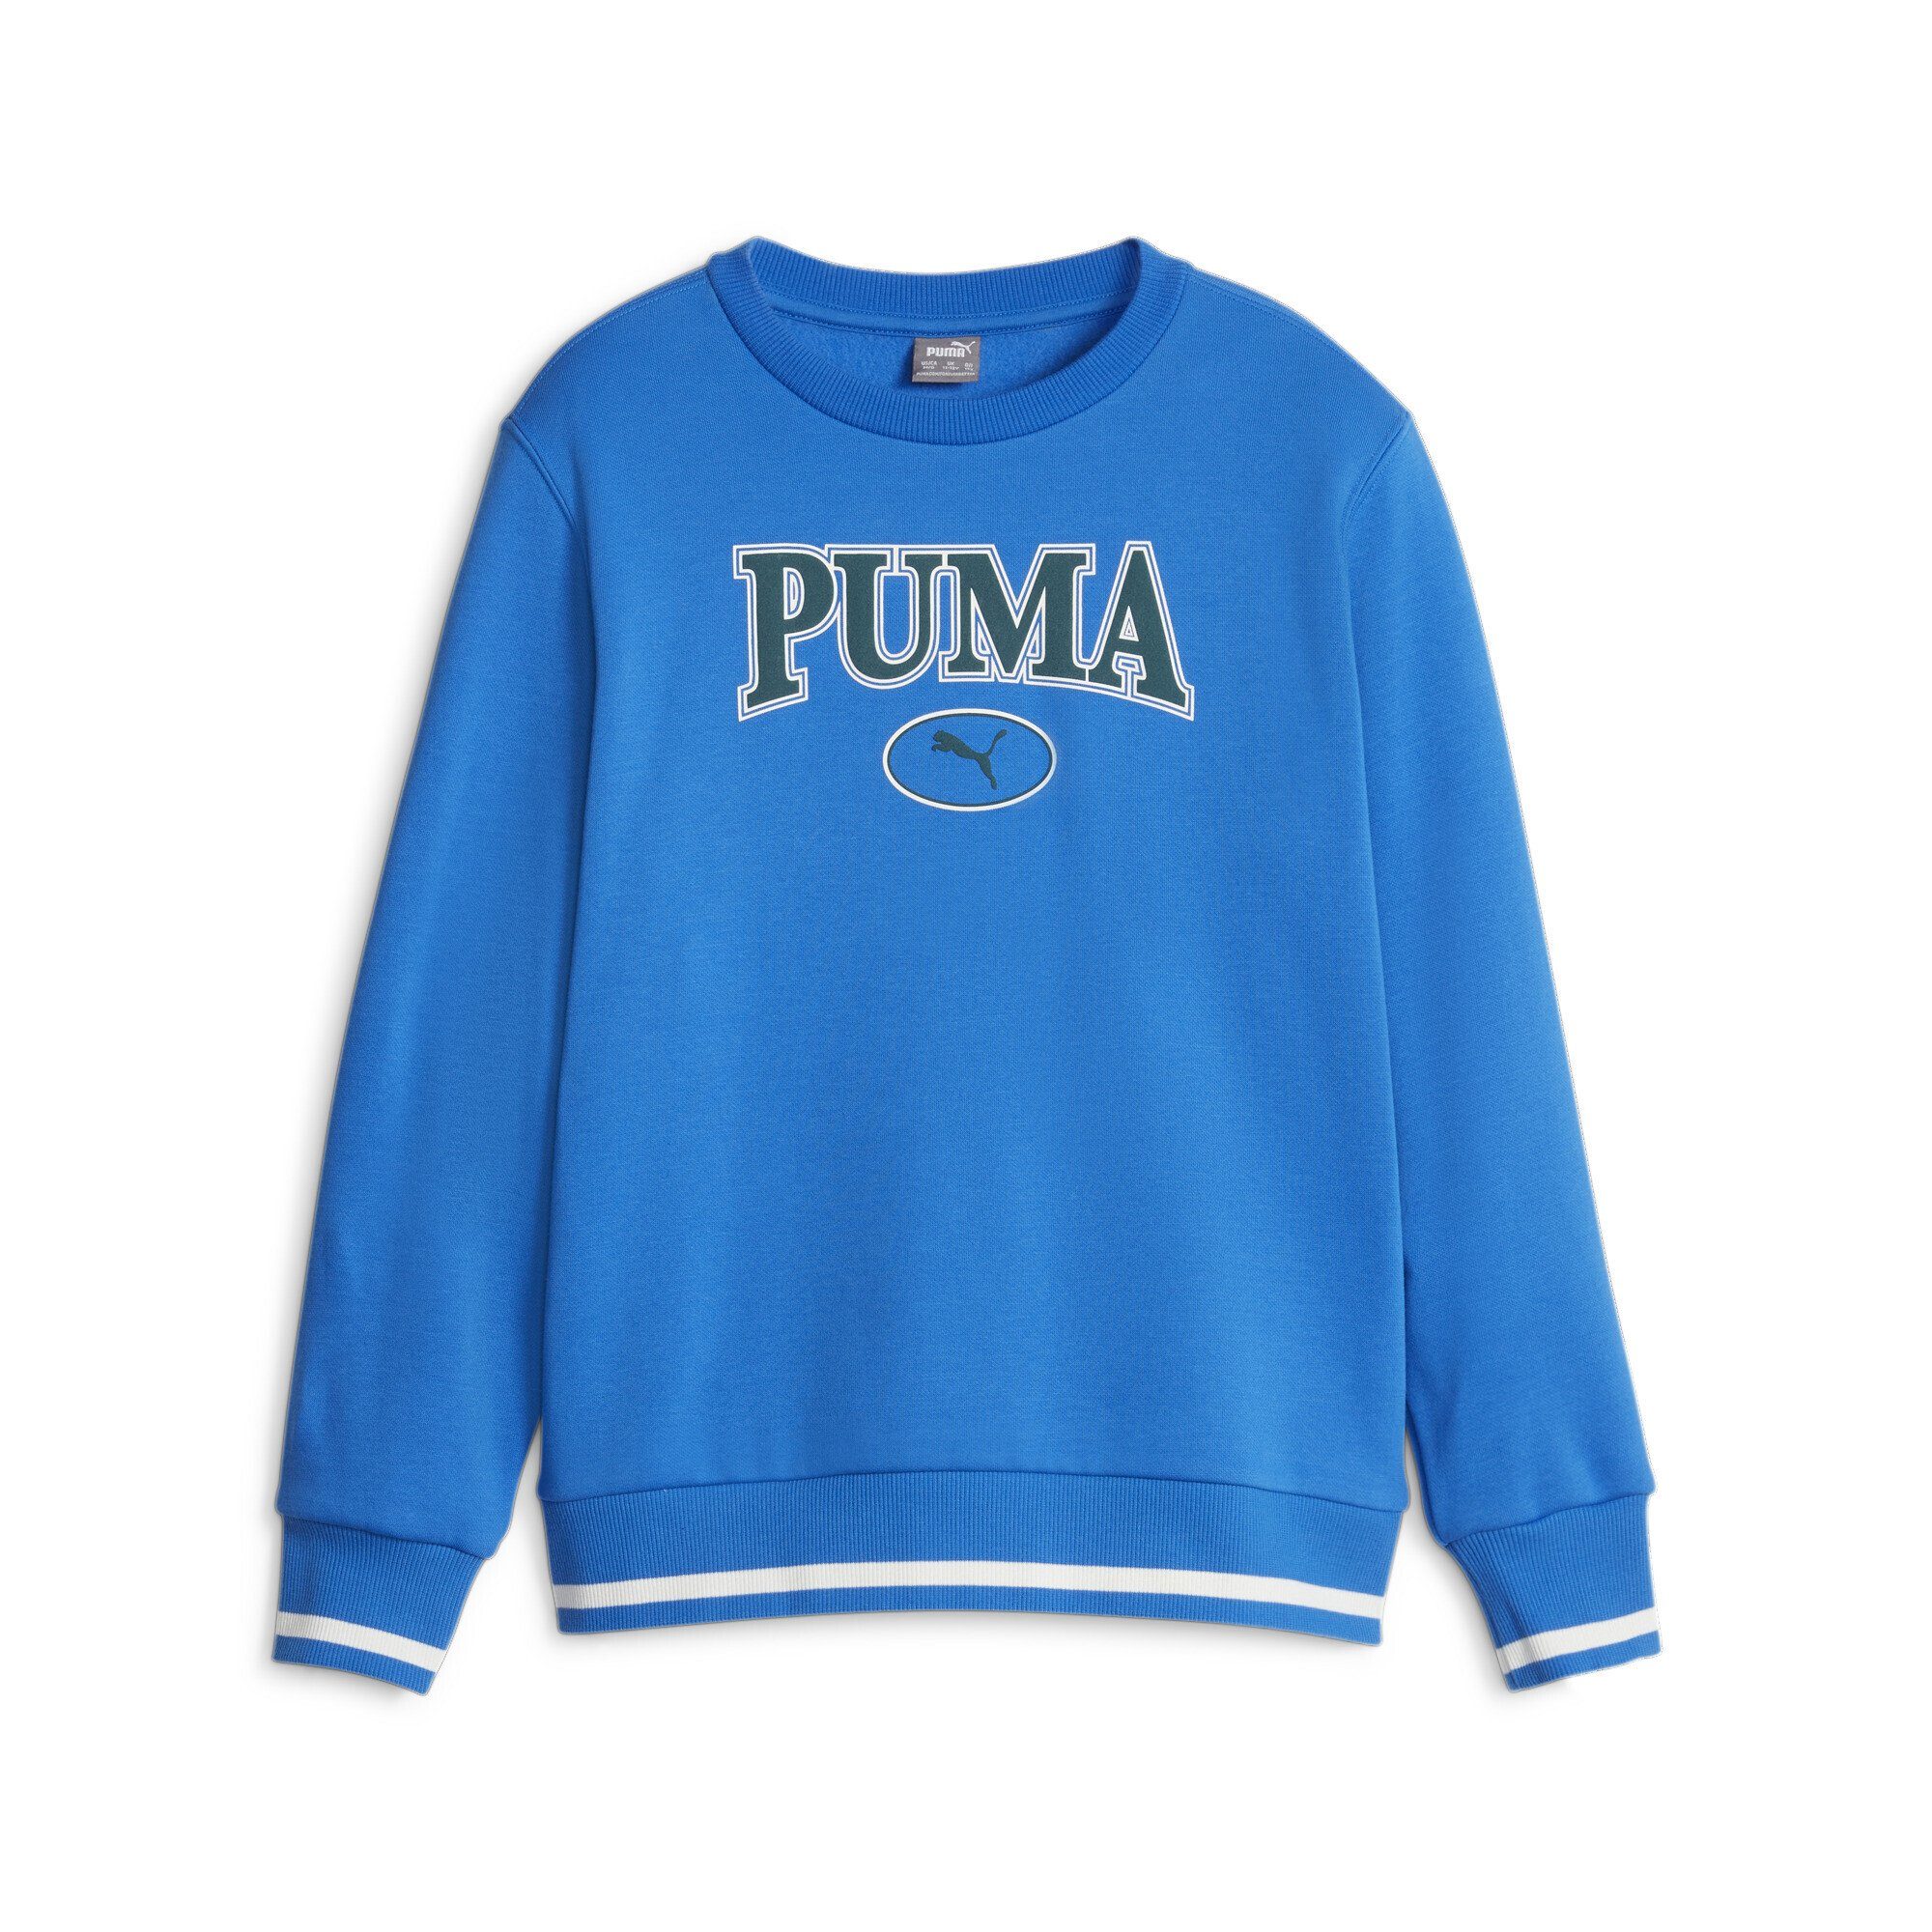 PUMA Sweatshirt PUMA SQUAD Sweatshirt Jugendliche Racing Blue